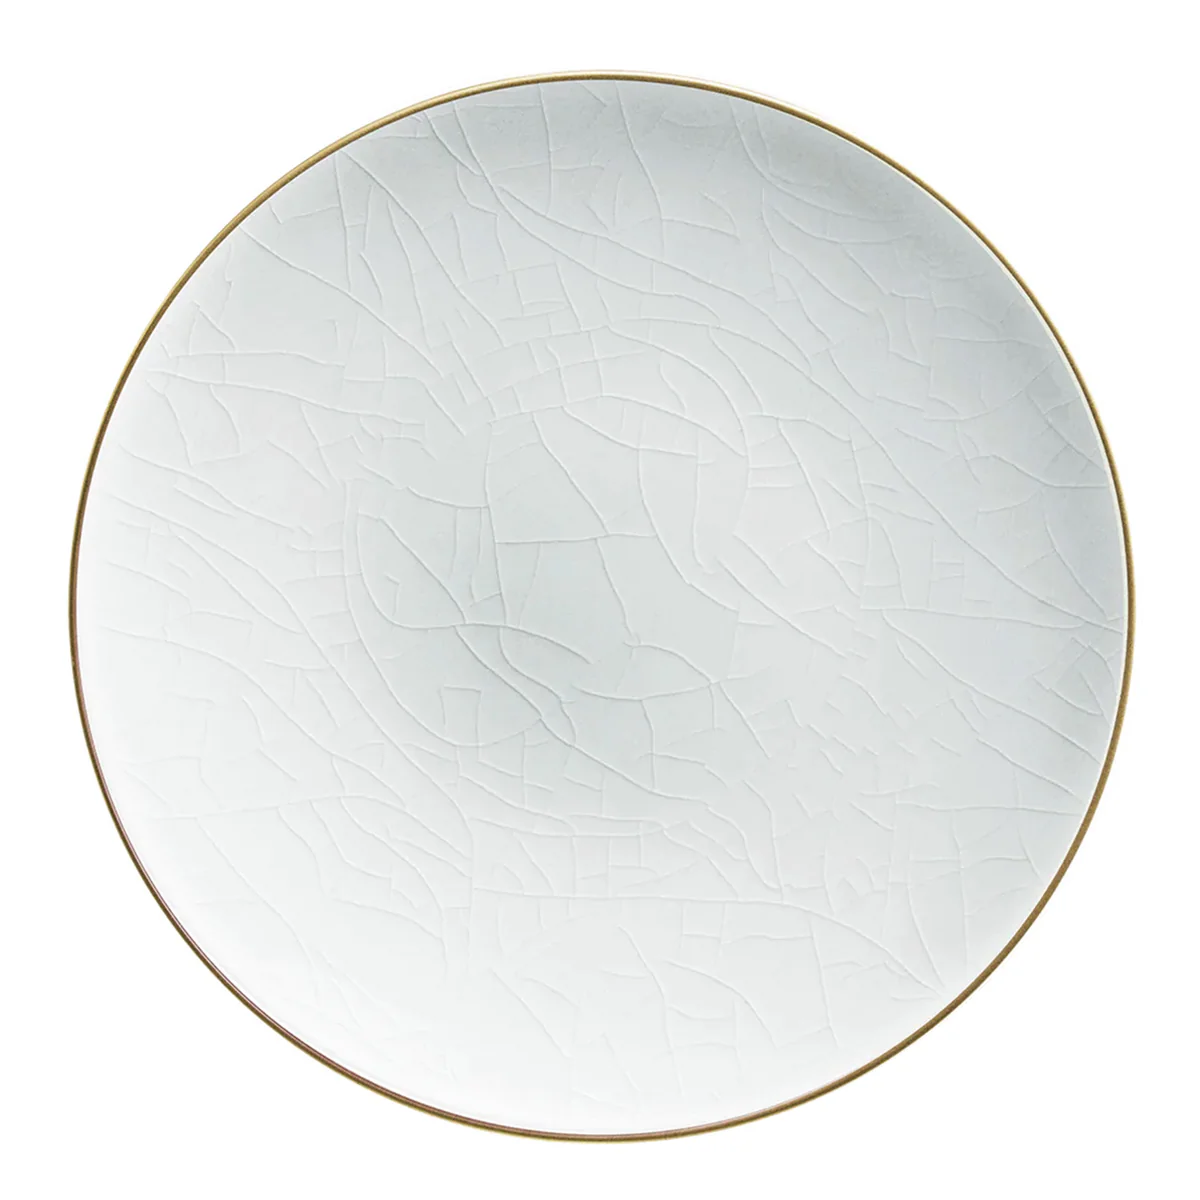 CRAQUELÉ Iceberg gold net - Charger plate